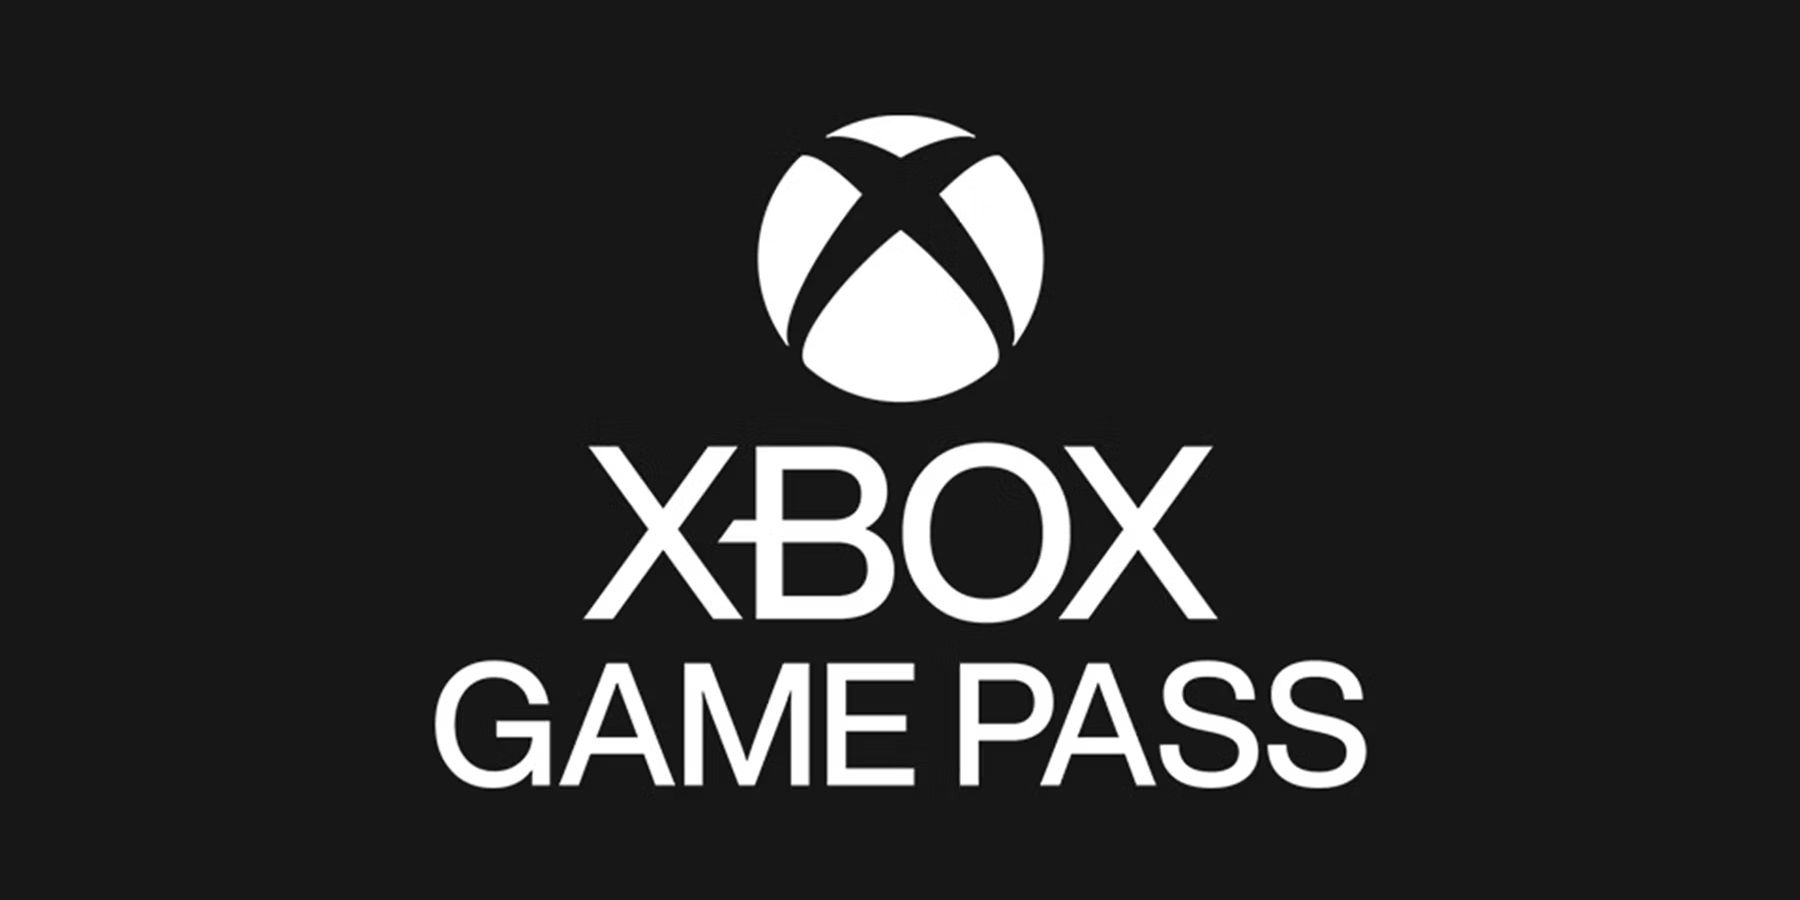 xbox game pass name and logo